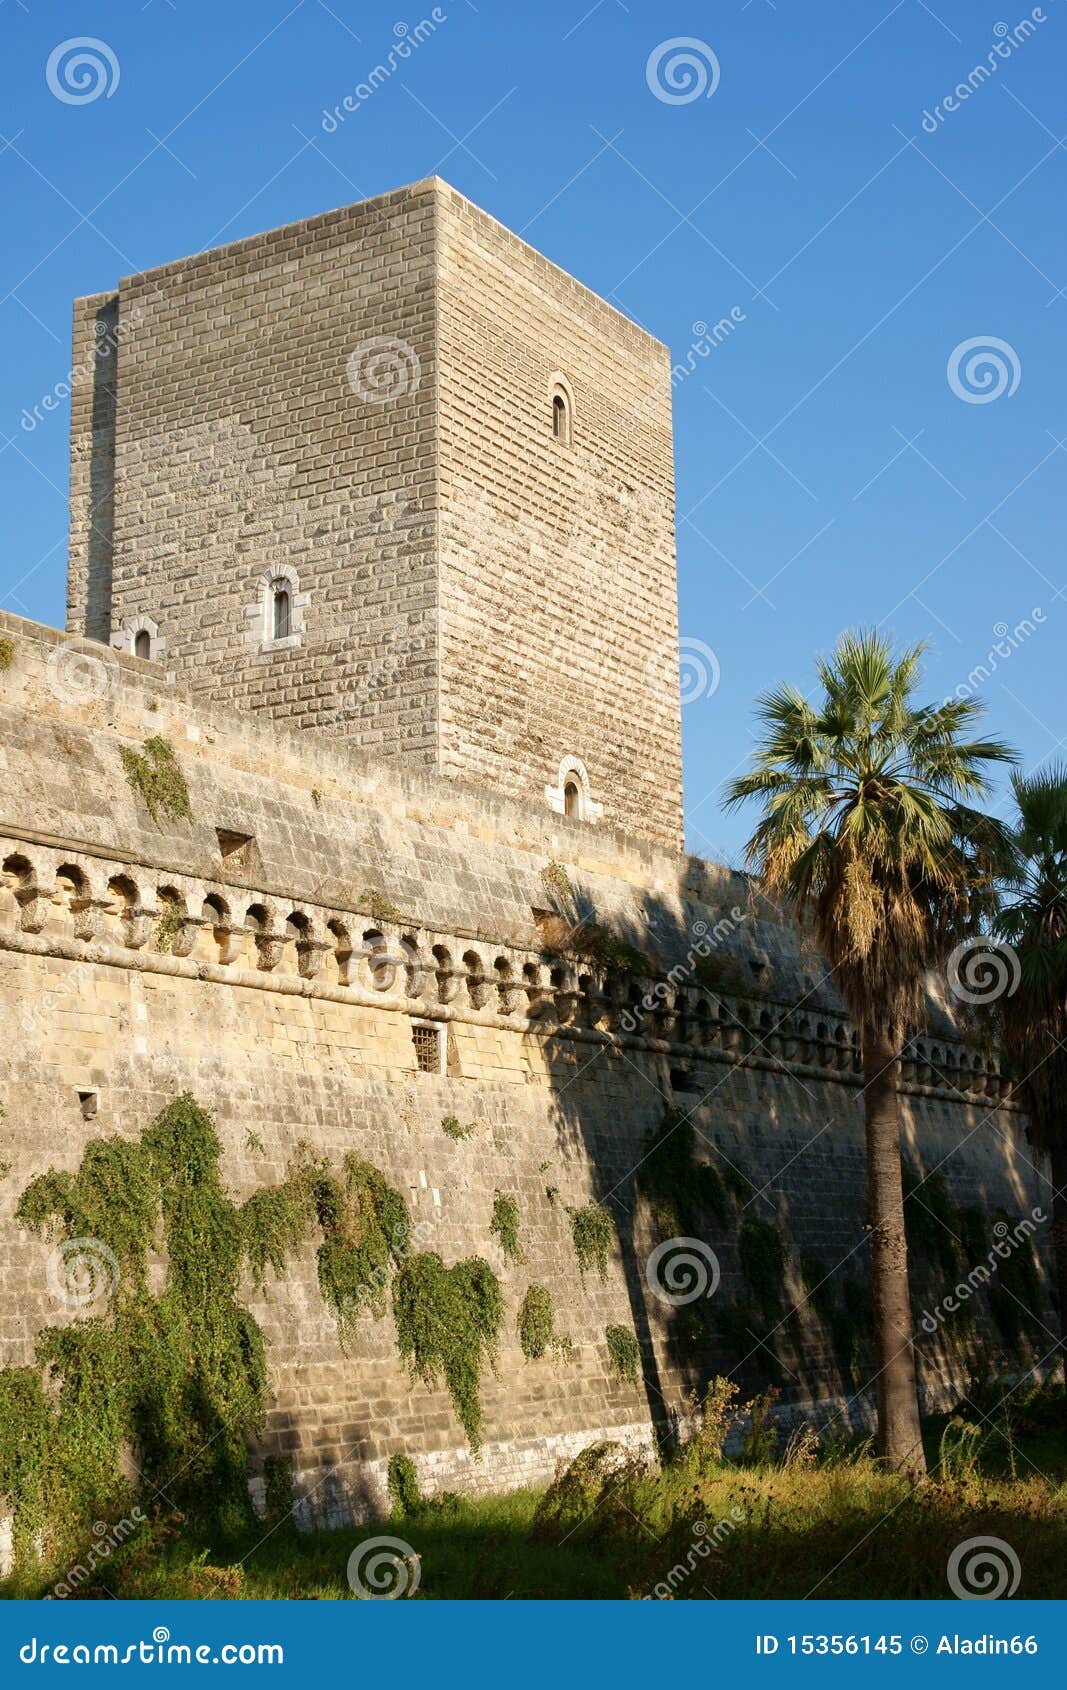 norman-swabian castle of bari, apulia